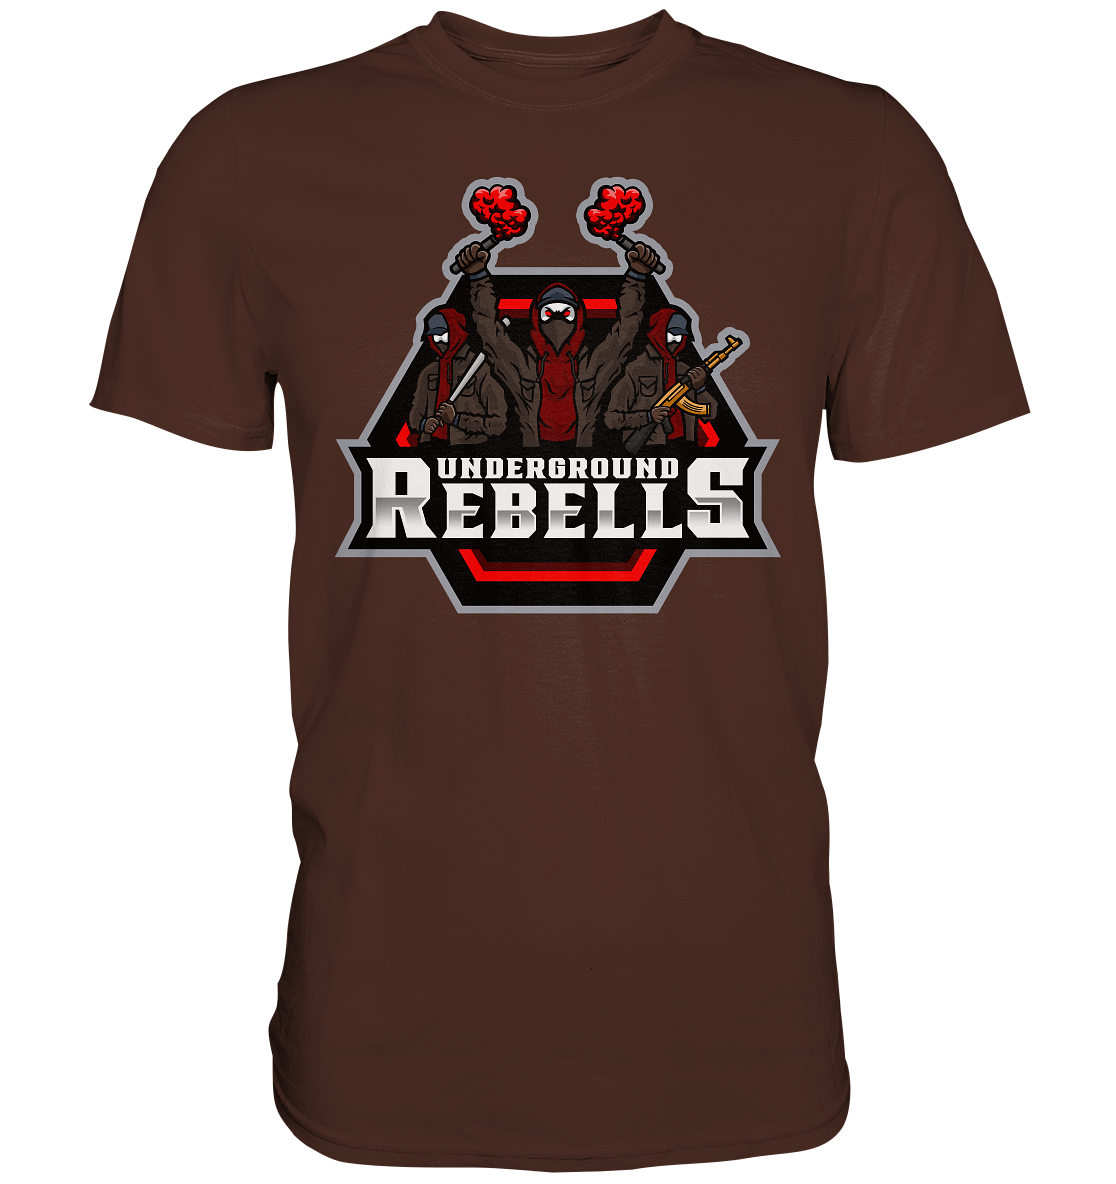 UNDERGROUND REBELLS - Basic Shirt